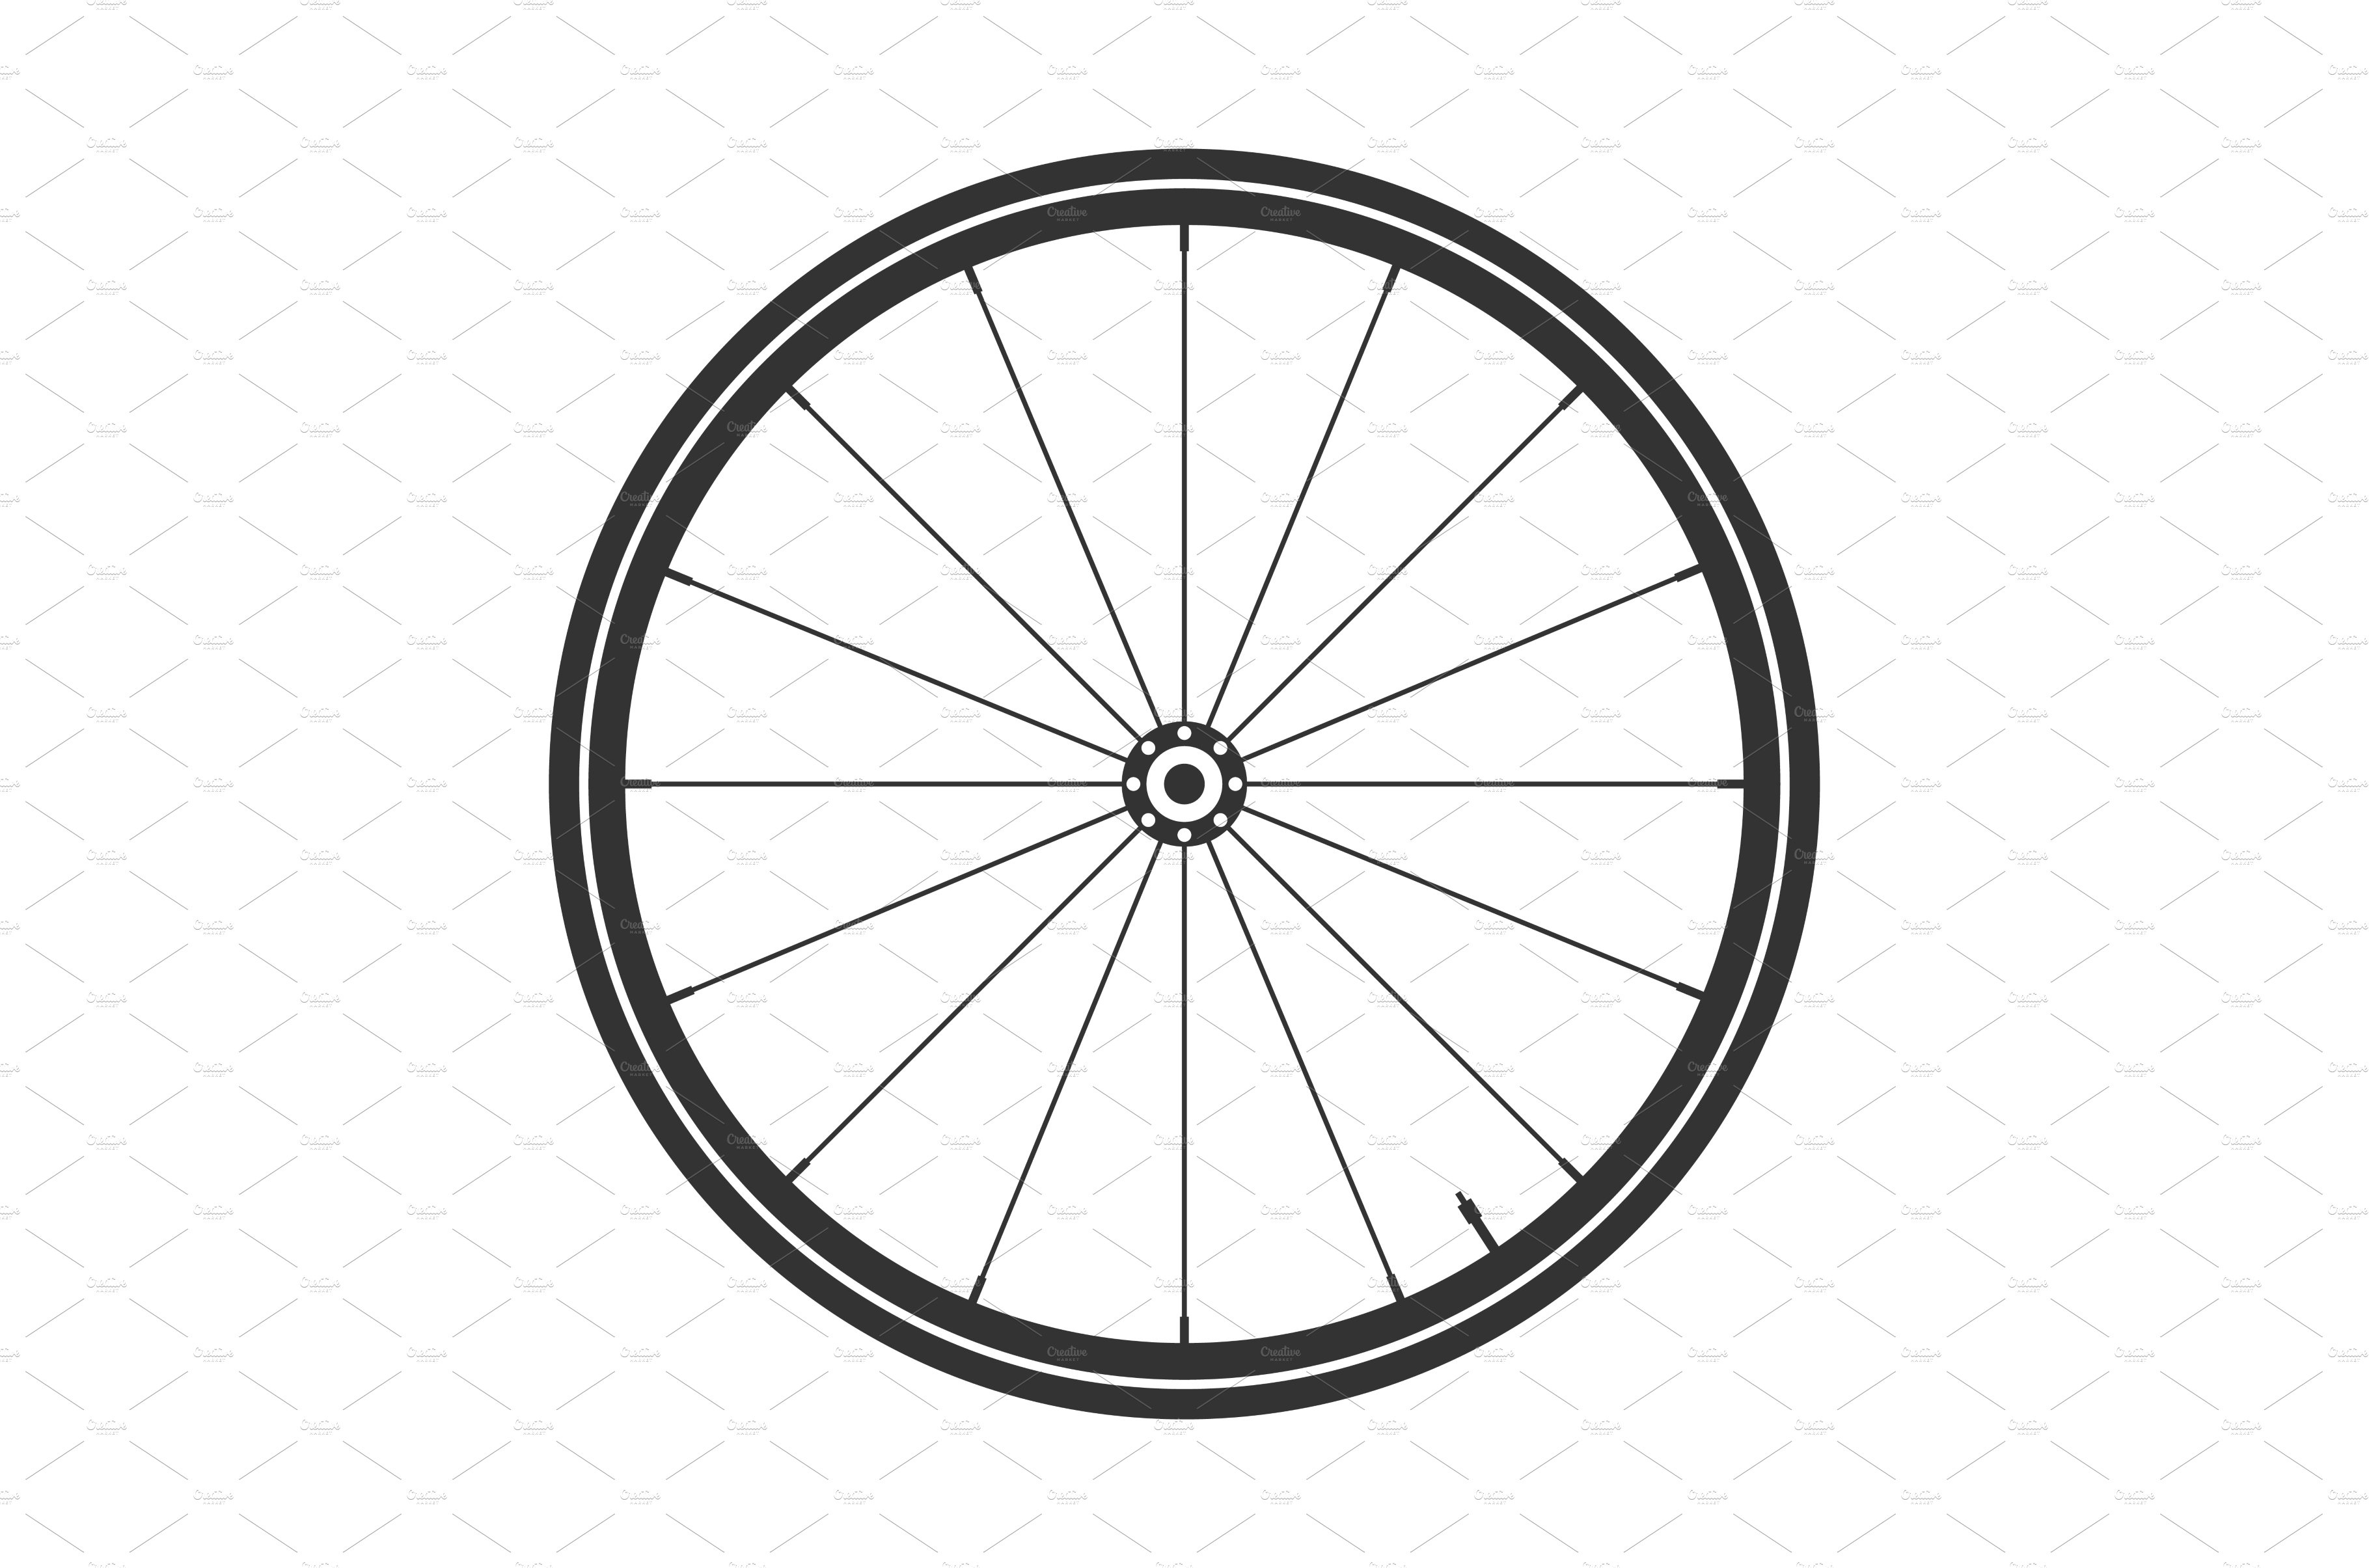 Bicycle mtb wheel symbol,vector cover image.